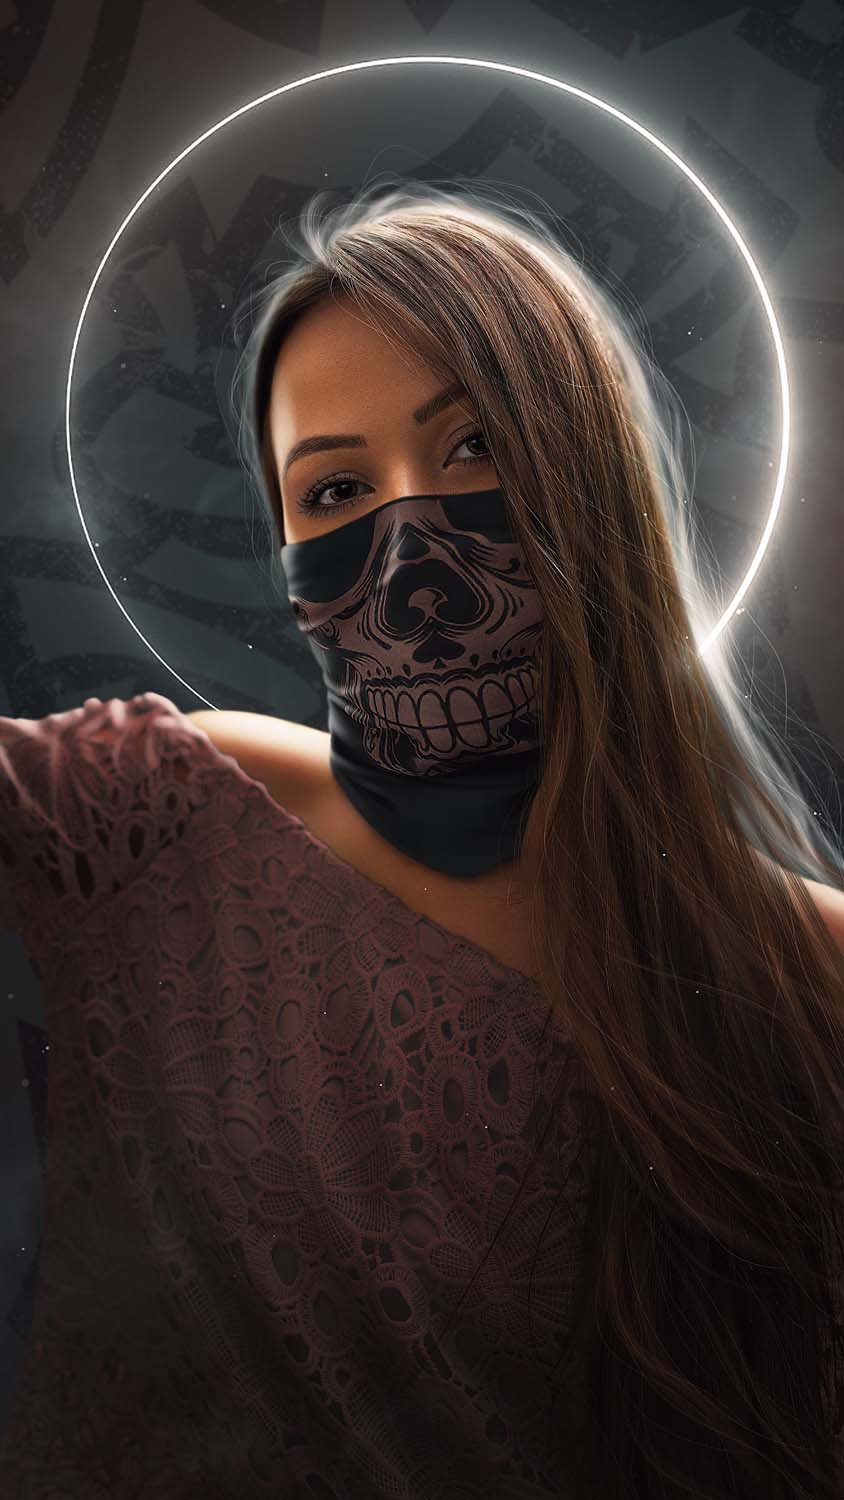 Ghost Mask Girl iPhone Wallpaper HD 1